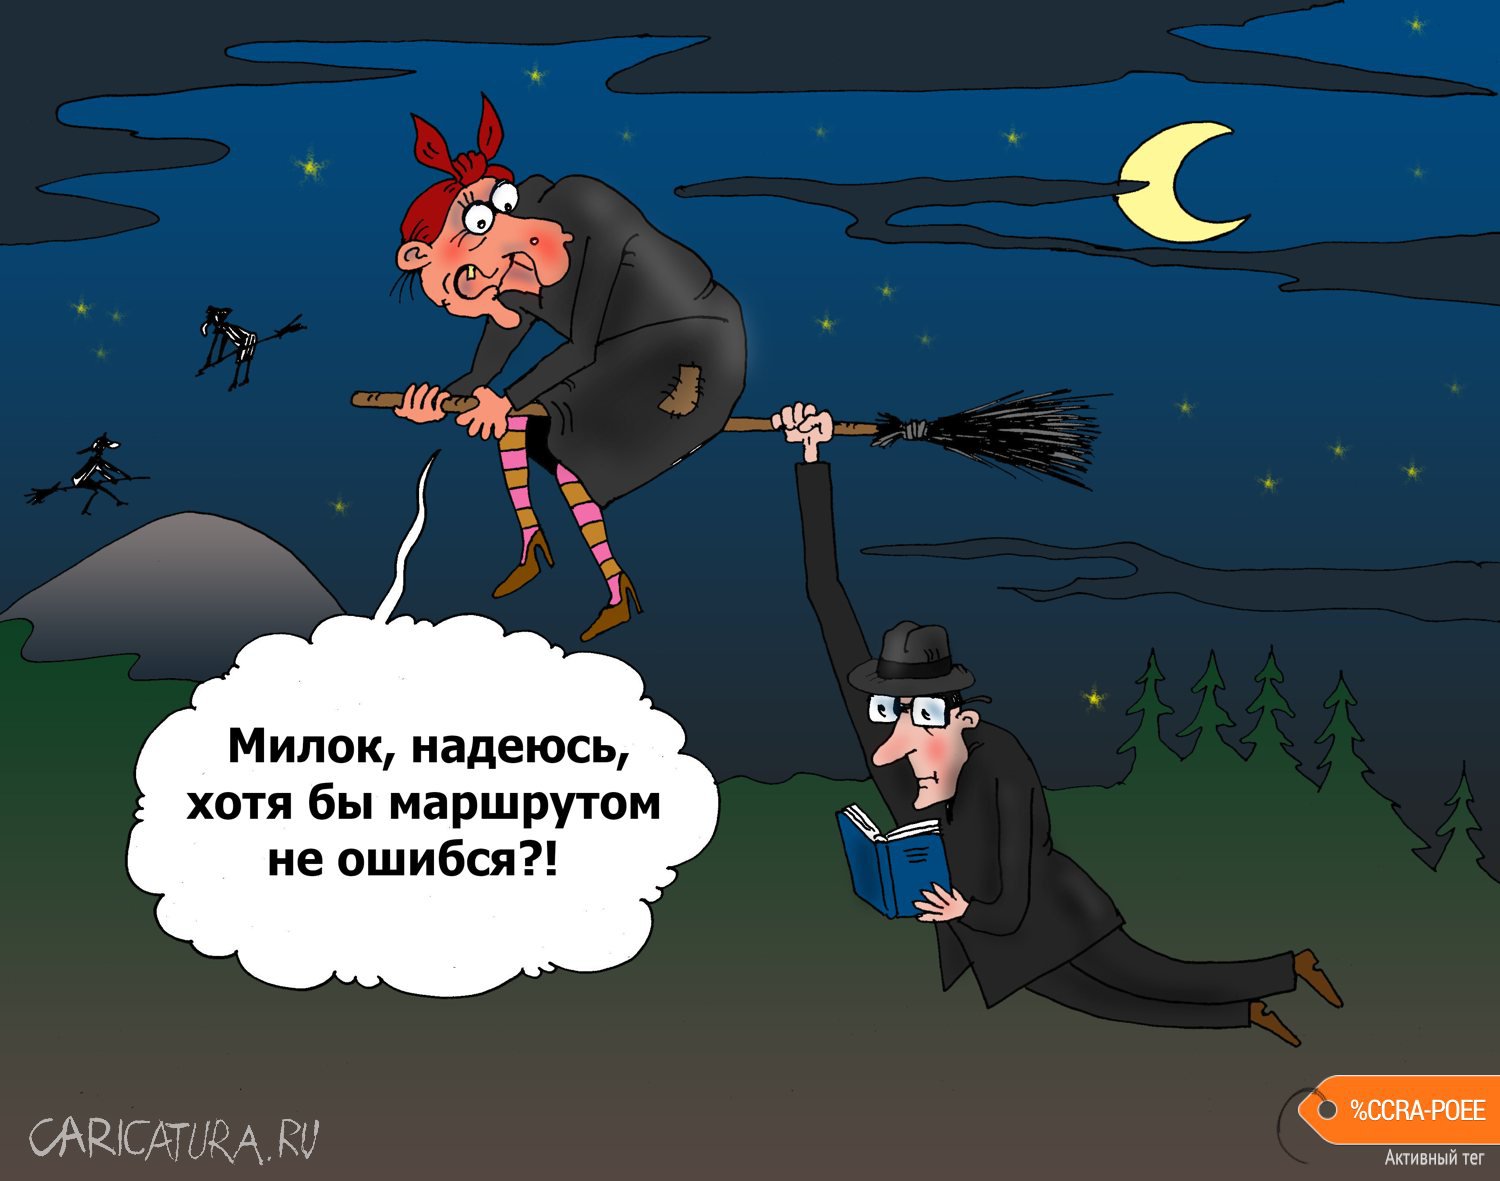 Карикатура "На Лысую гору", Валерий Тарасенко